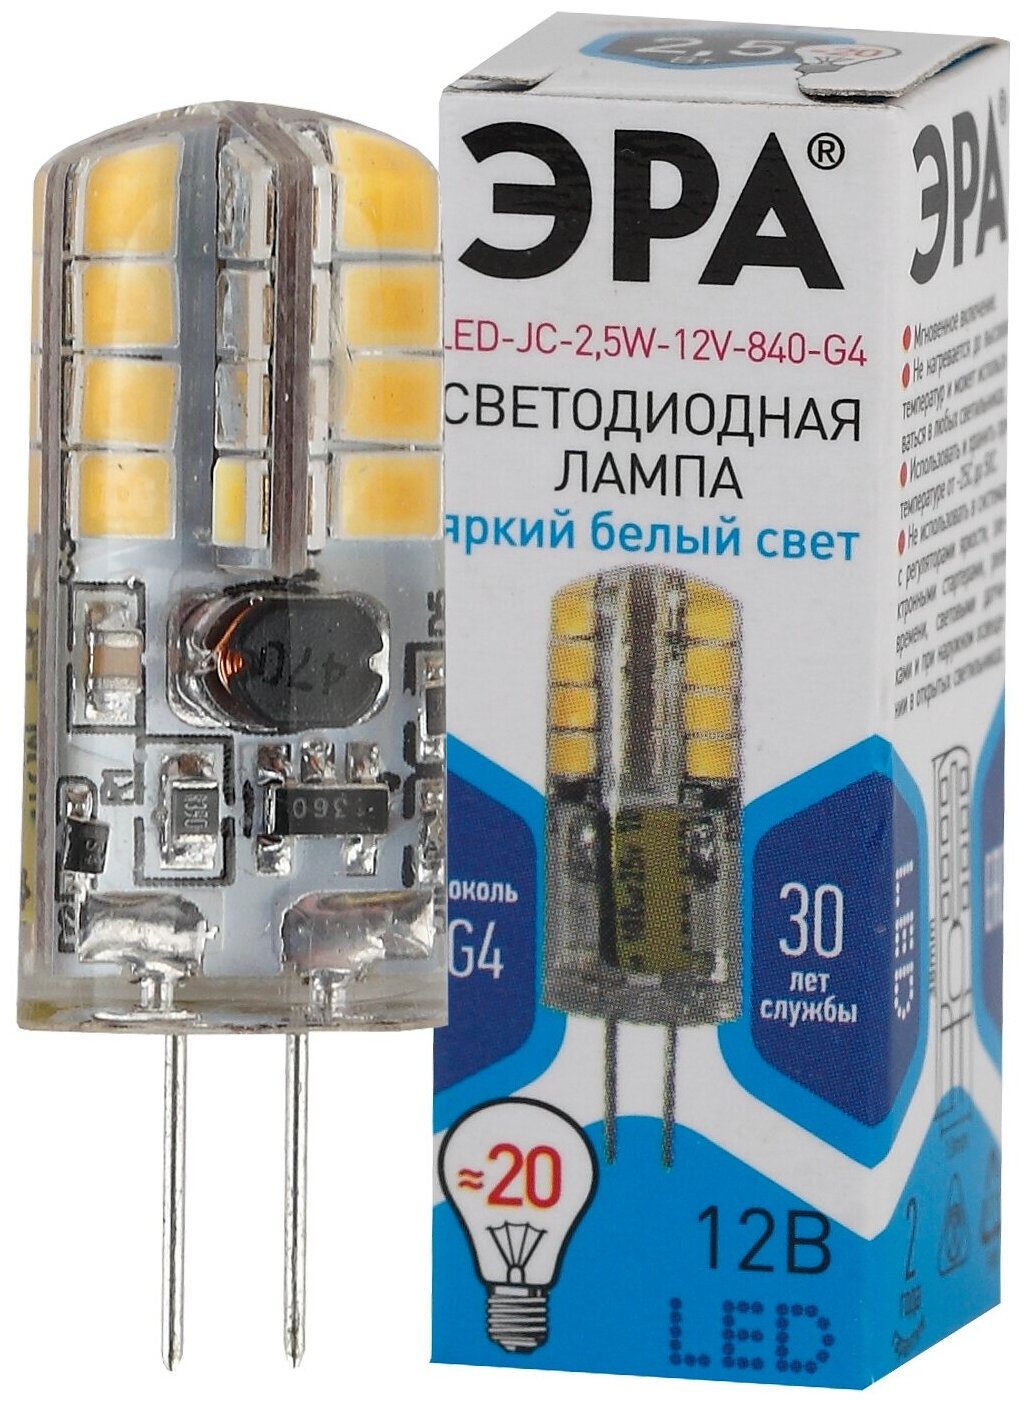 Лампочка светодиодная ЭРА STD LED JC-2,5W-12V-840-G4 G4 2,5Вт капсула нейтральный белый свет арт. Б0033192 (1 шт.)